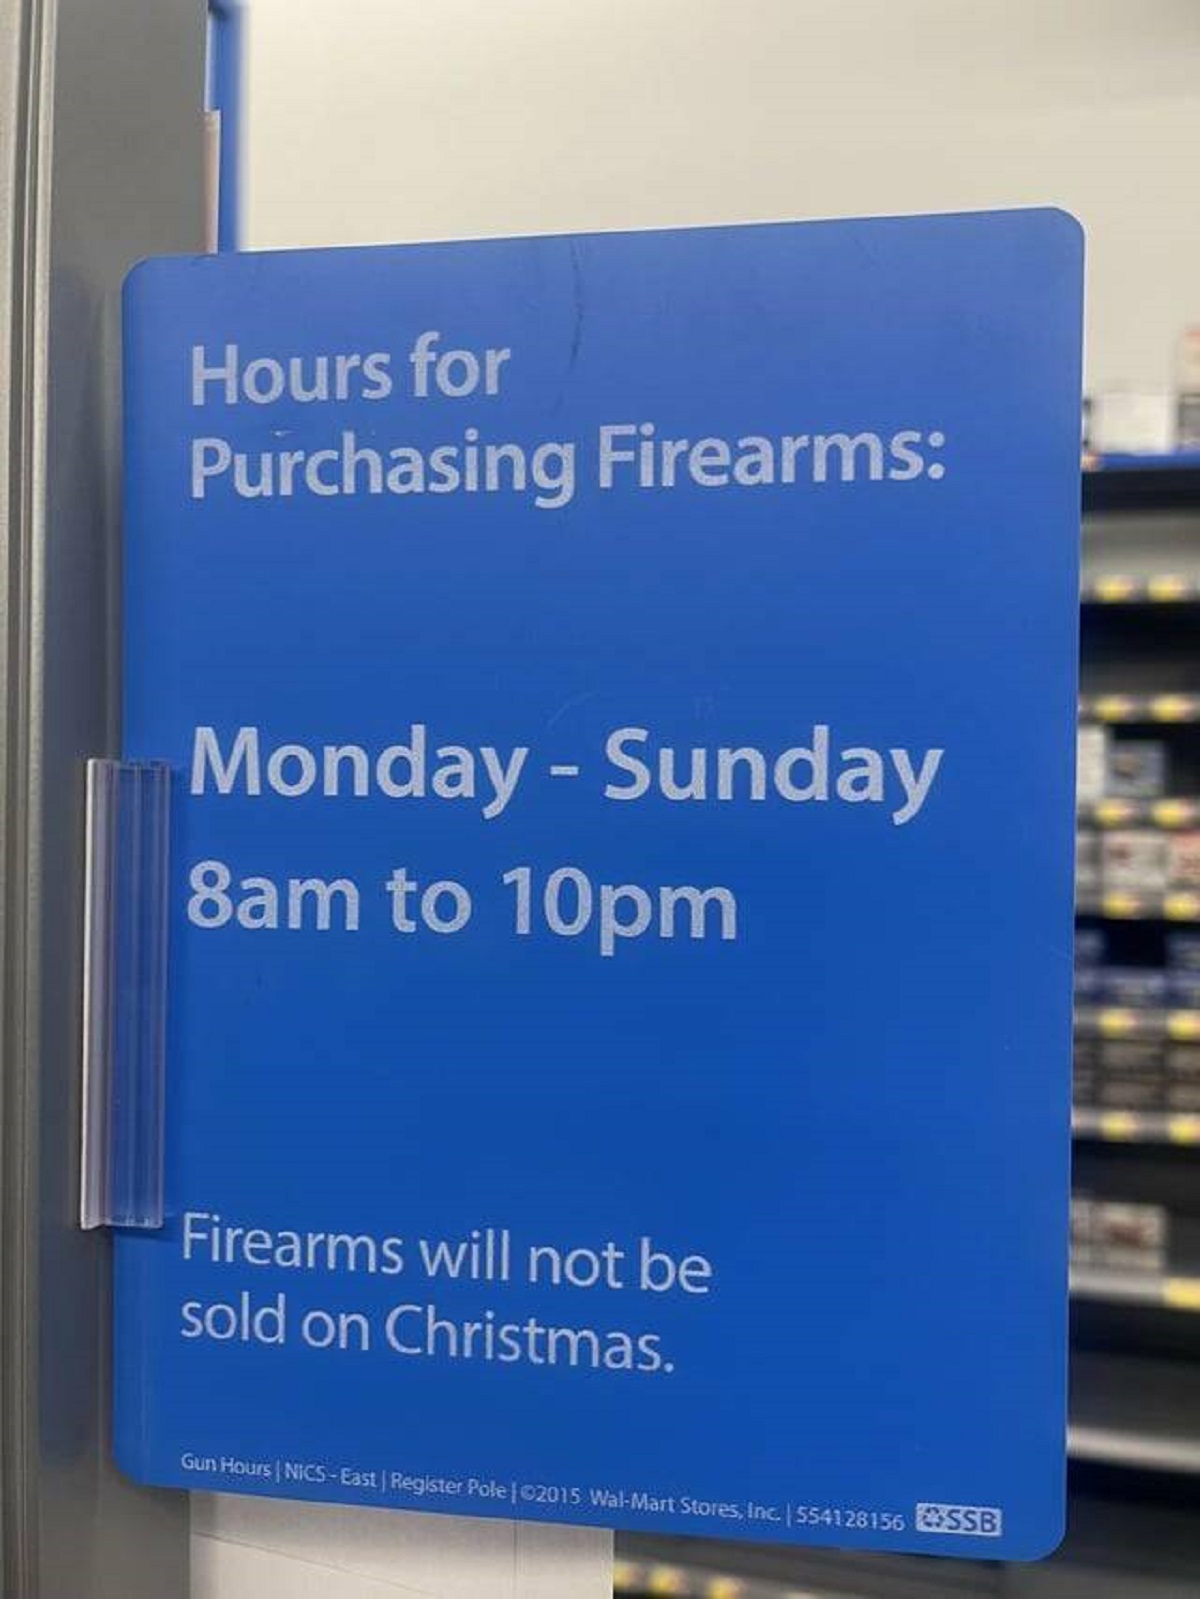 "Walmart doesn’t sell firearms on Christmas"